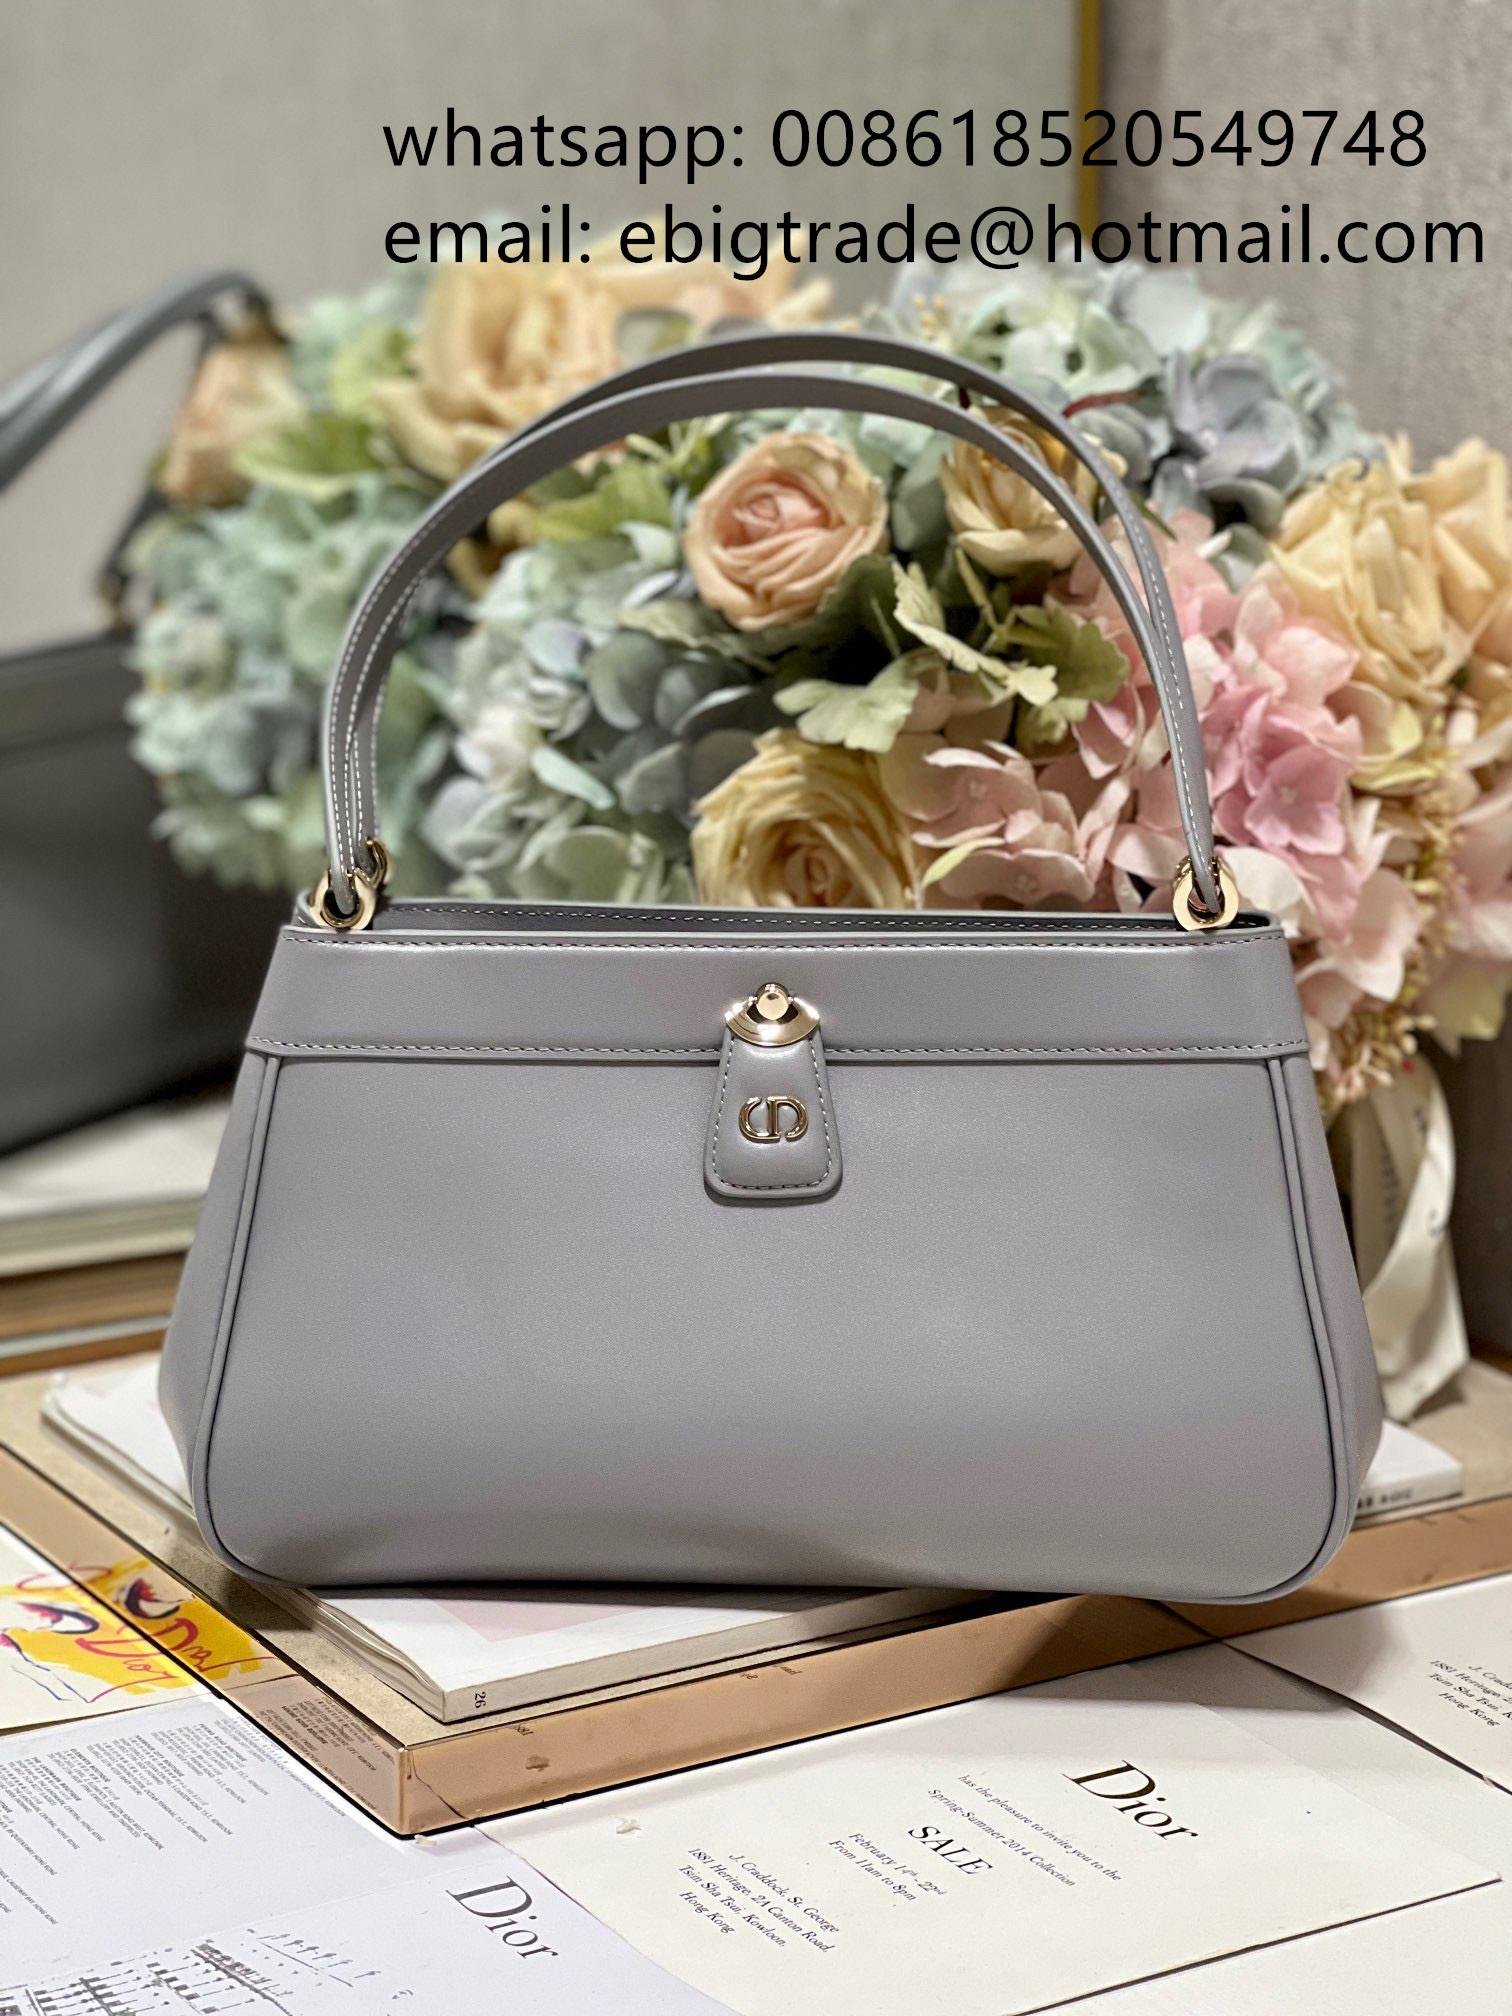 Lady      Medium      Key Bag Small      Key Bag discount      Bag online Outlet 2